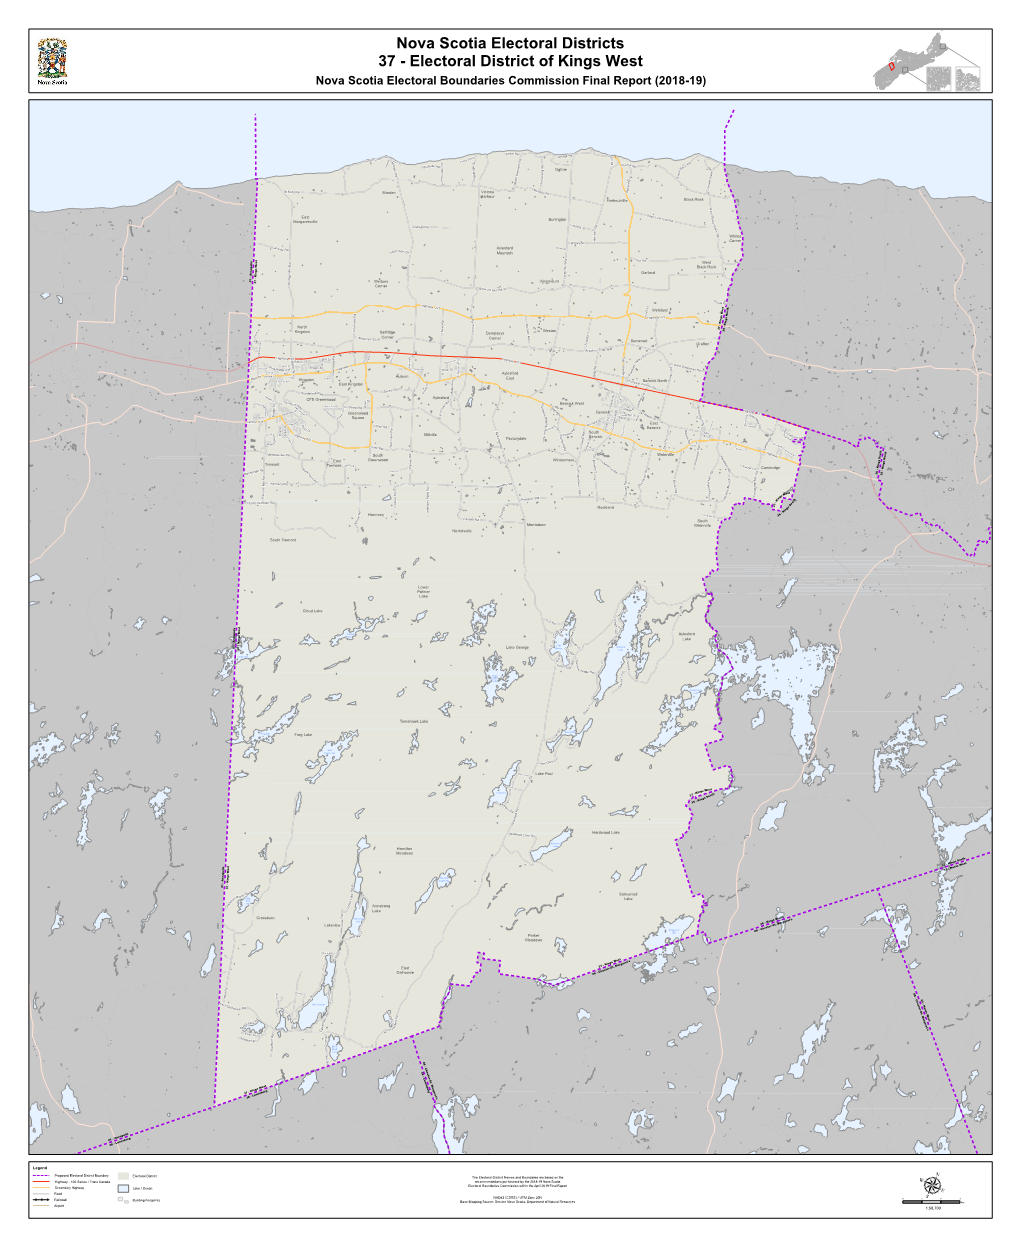 Kings West Nova Scotia Electoral Boundaries Commission Final Report (2018-19)